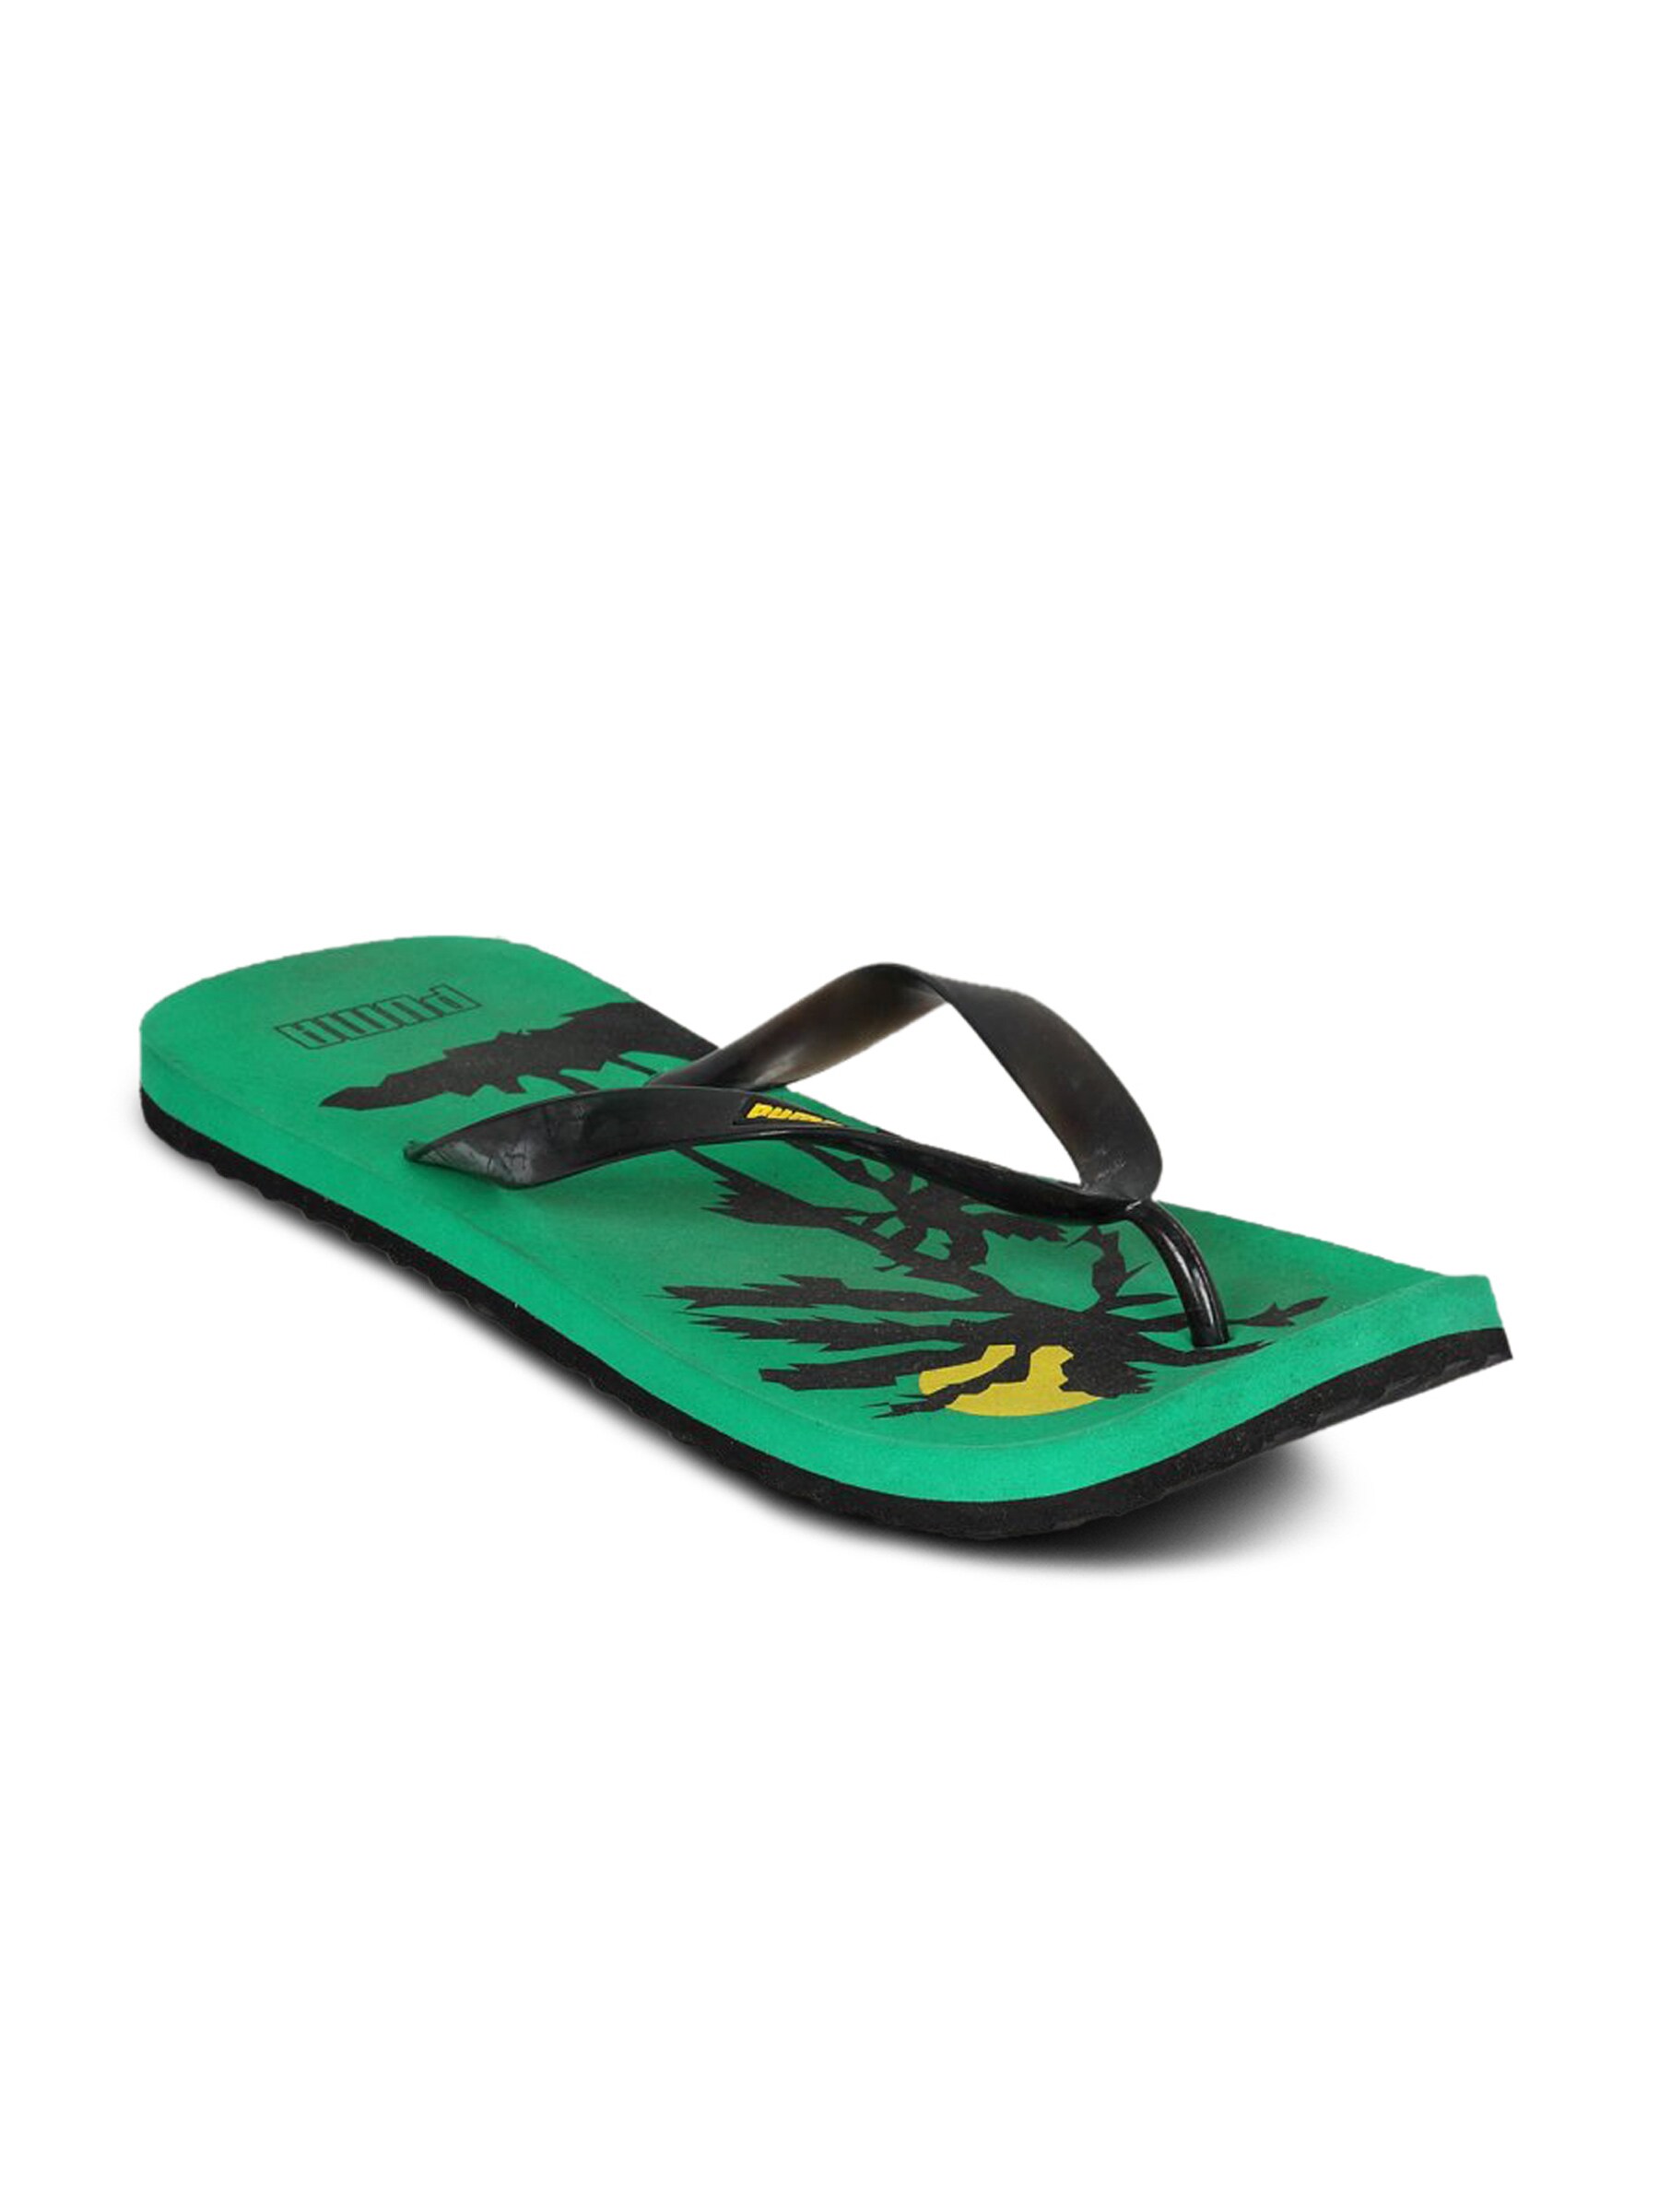 Puma Men's Beach Green Black Flip Flop